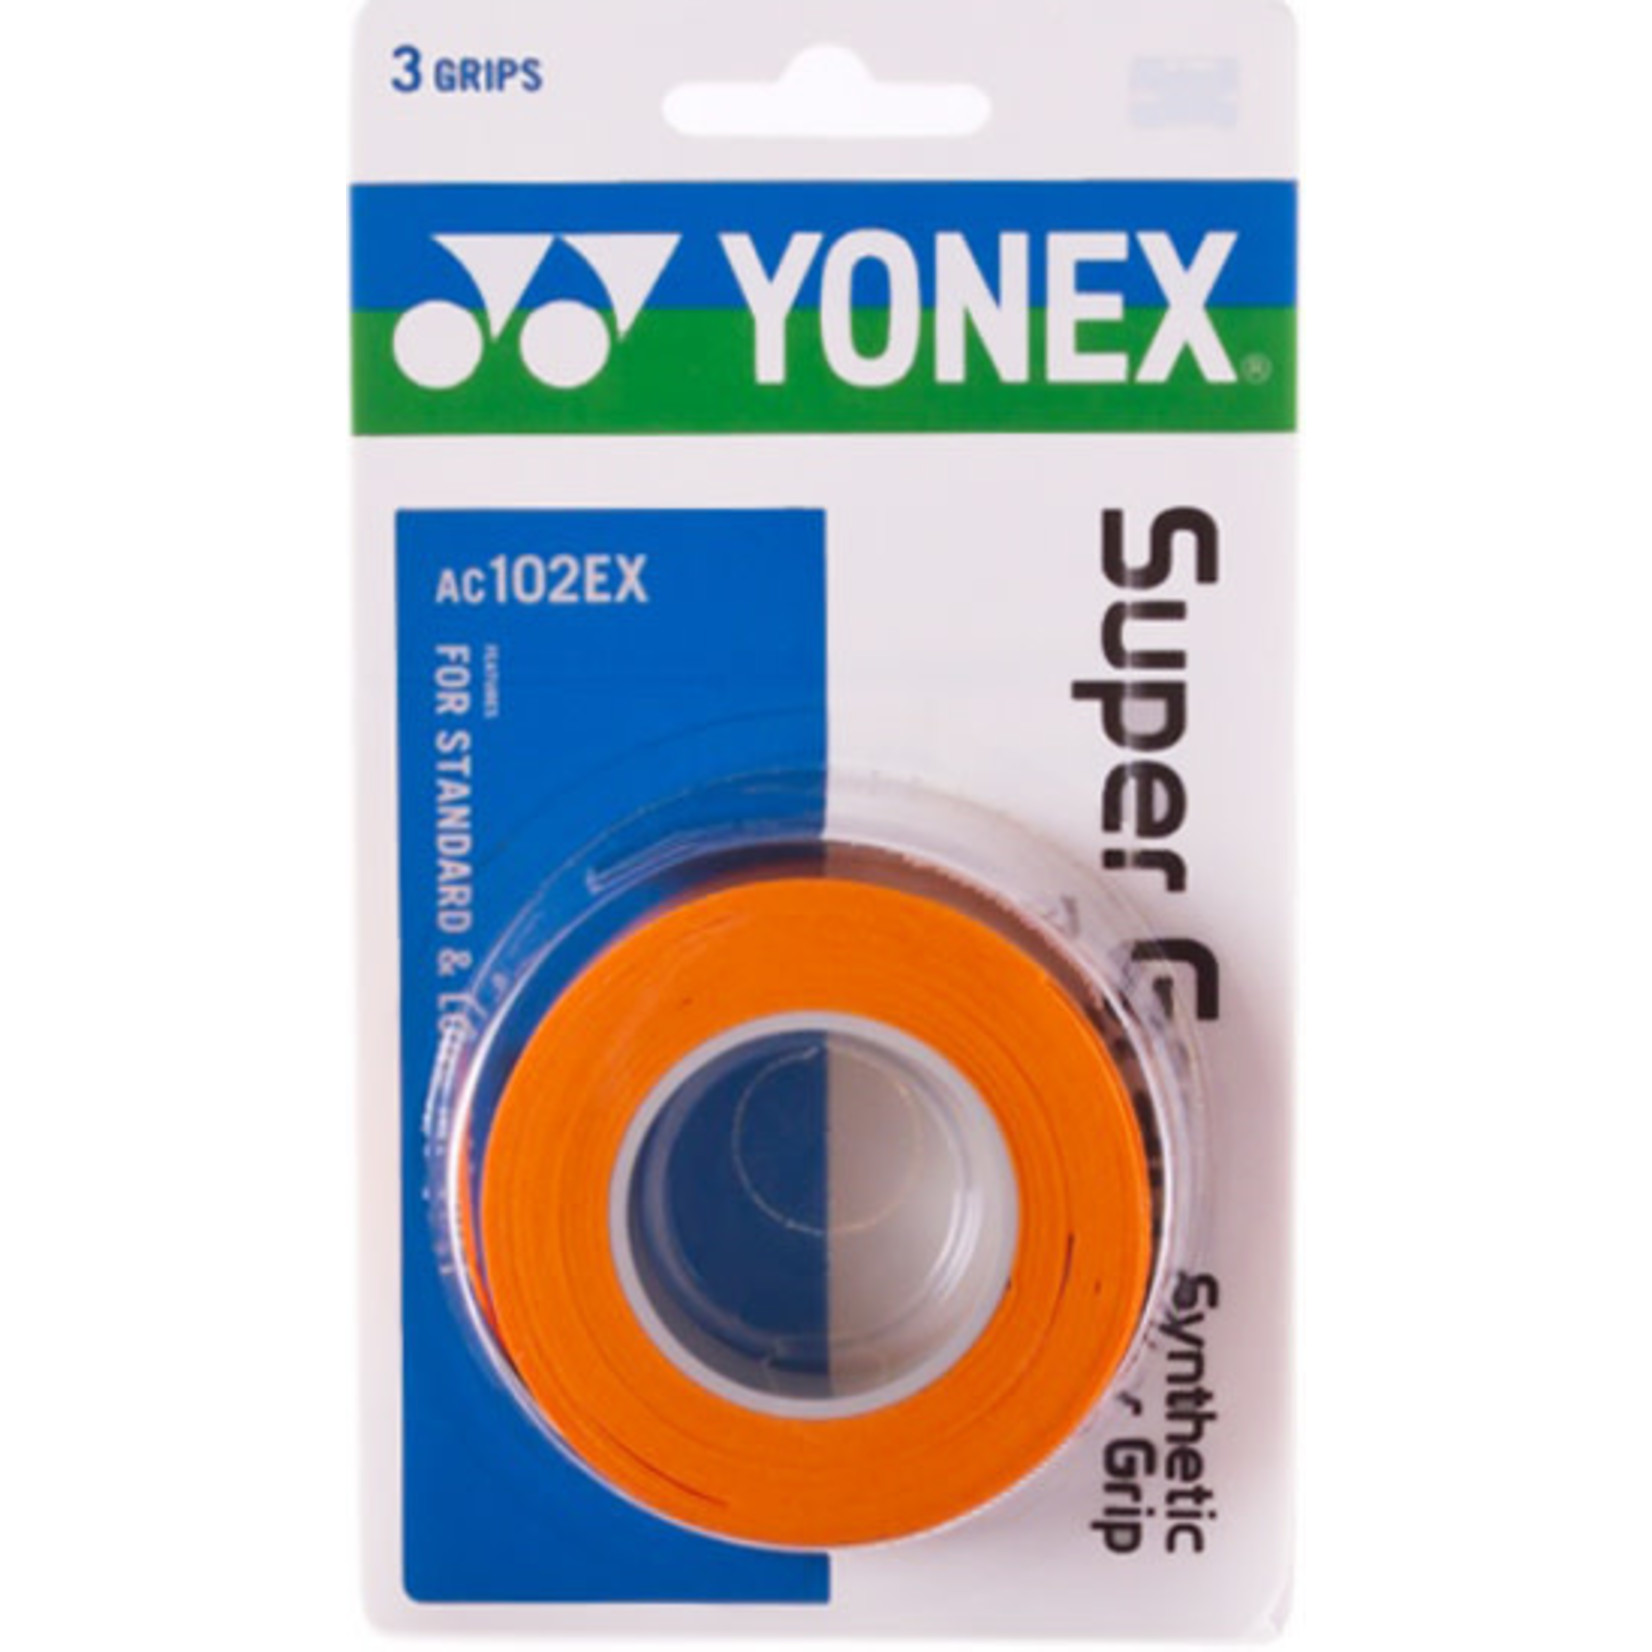 Yonex Yonex Super Grap Overgrips - Orange